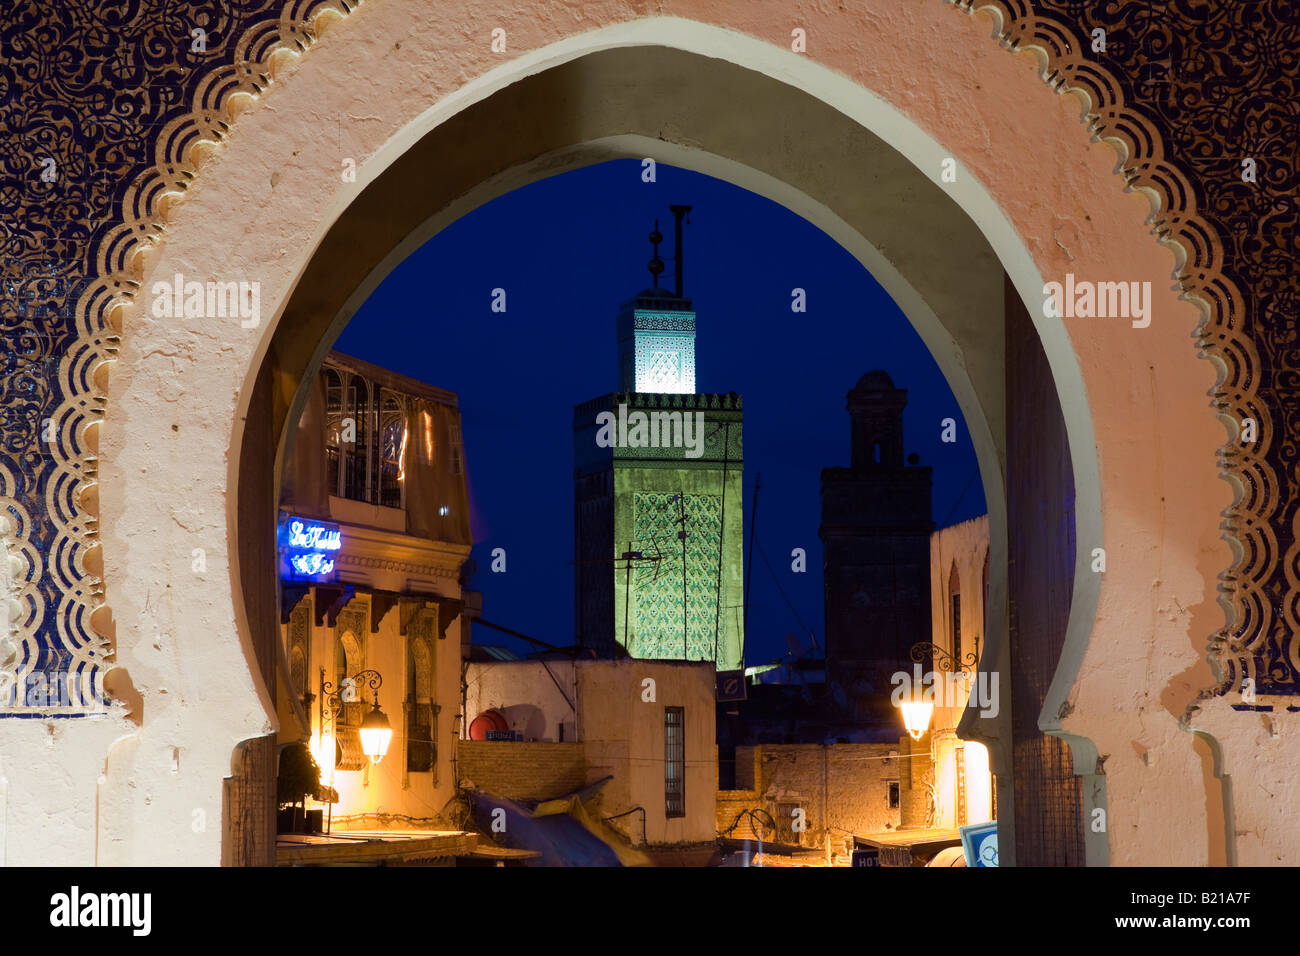 Fes Bab Boujloud and minaret of the Kairaouine Mosque Fes el bali Stock Photo